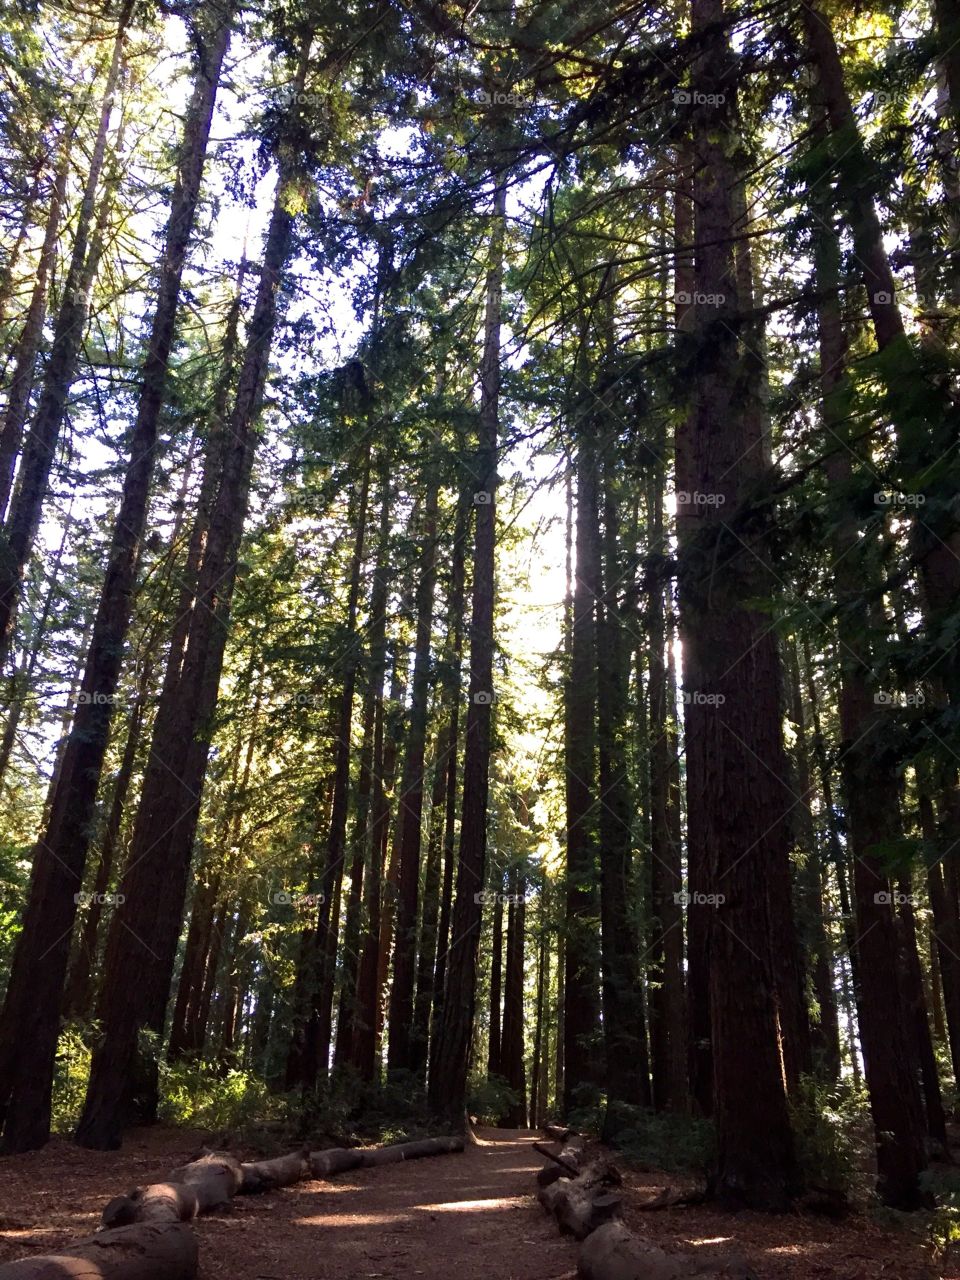 Sunshine peeking through some redwoods in Oakland, California USA 